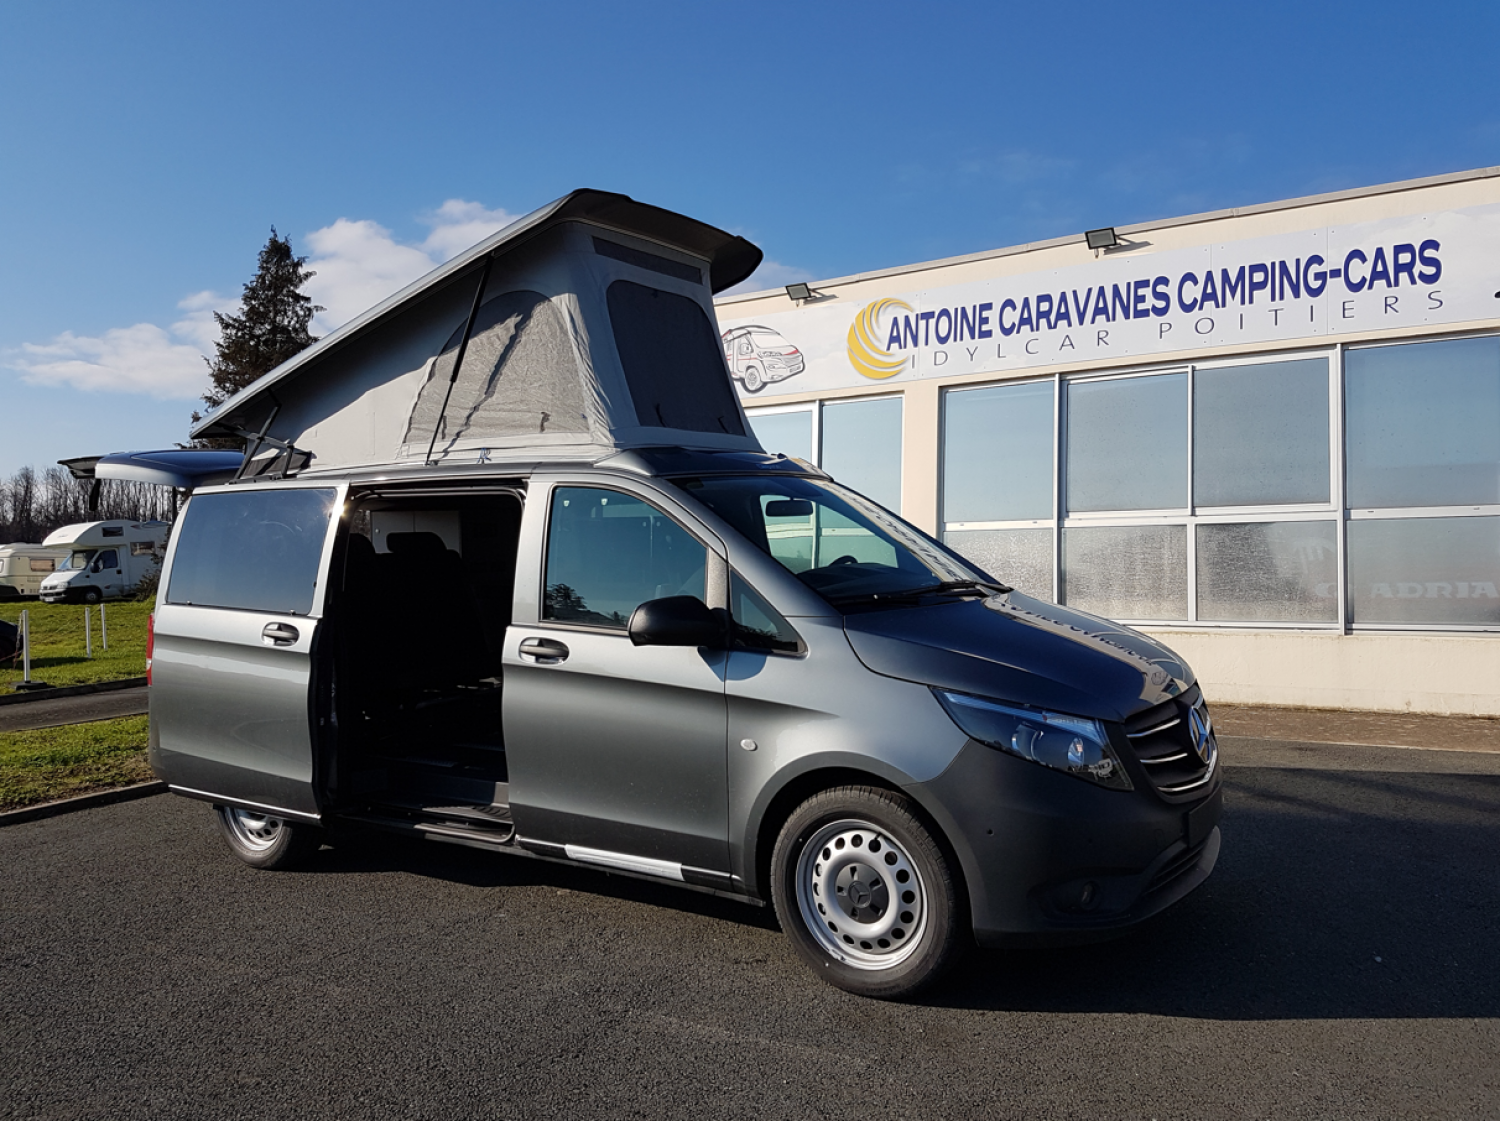 Antoine Caravanes et Camping Car - Campster CAMPSTAR à 73 250 €